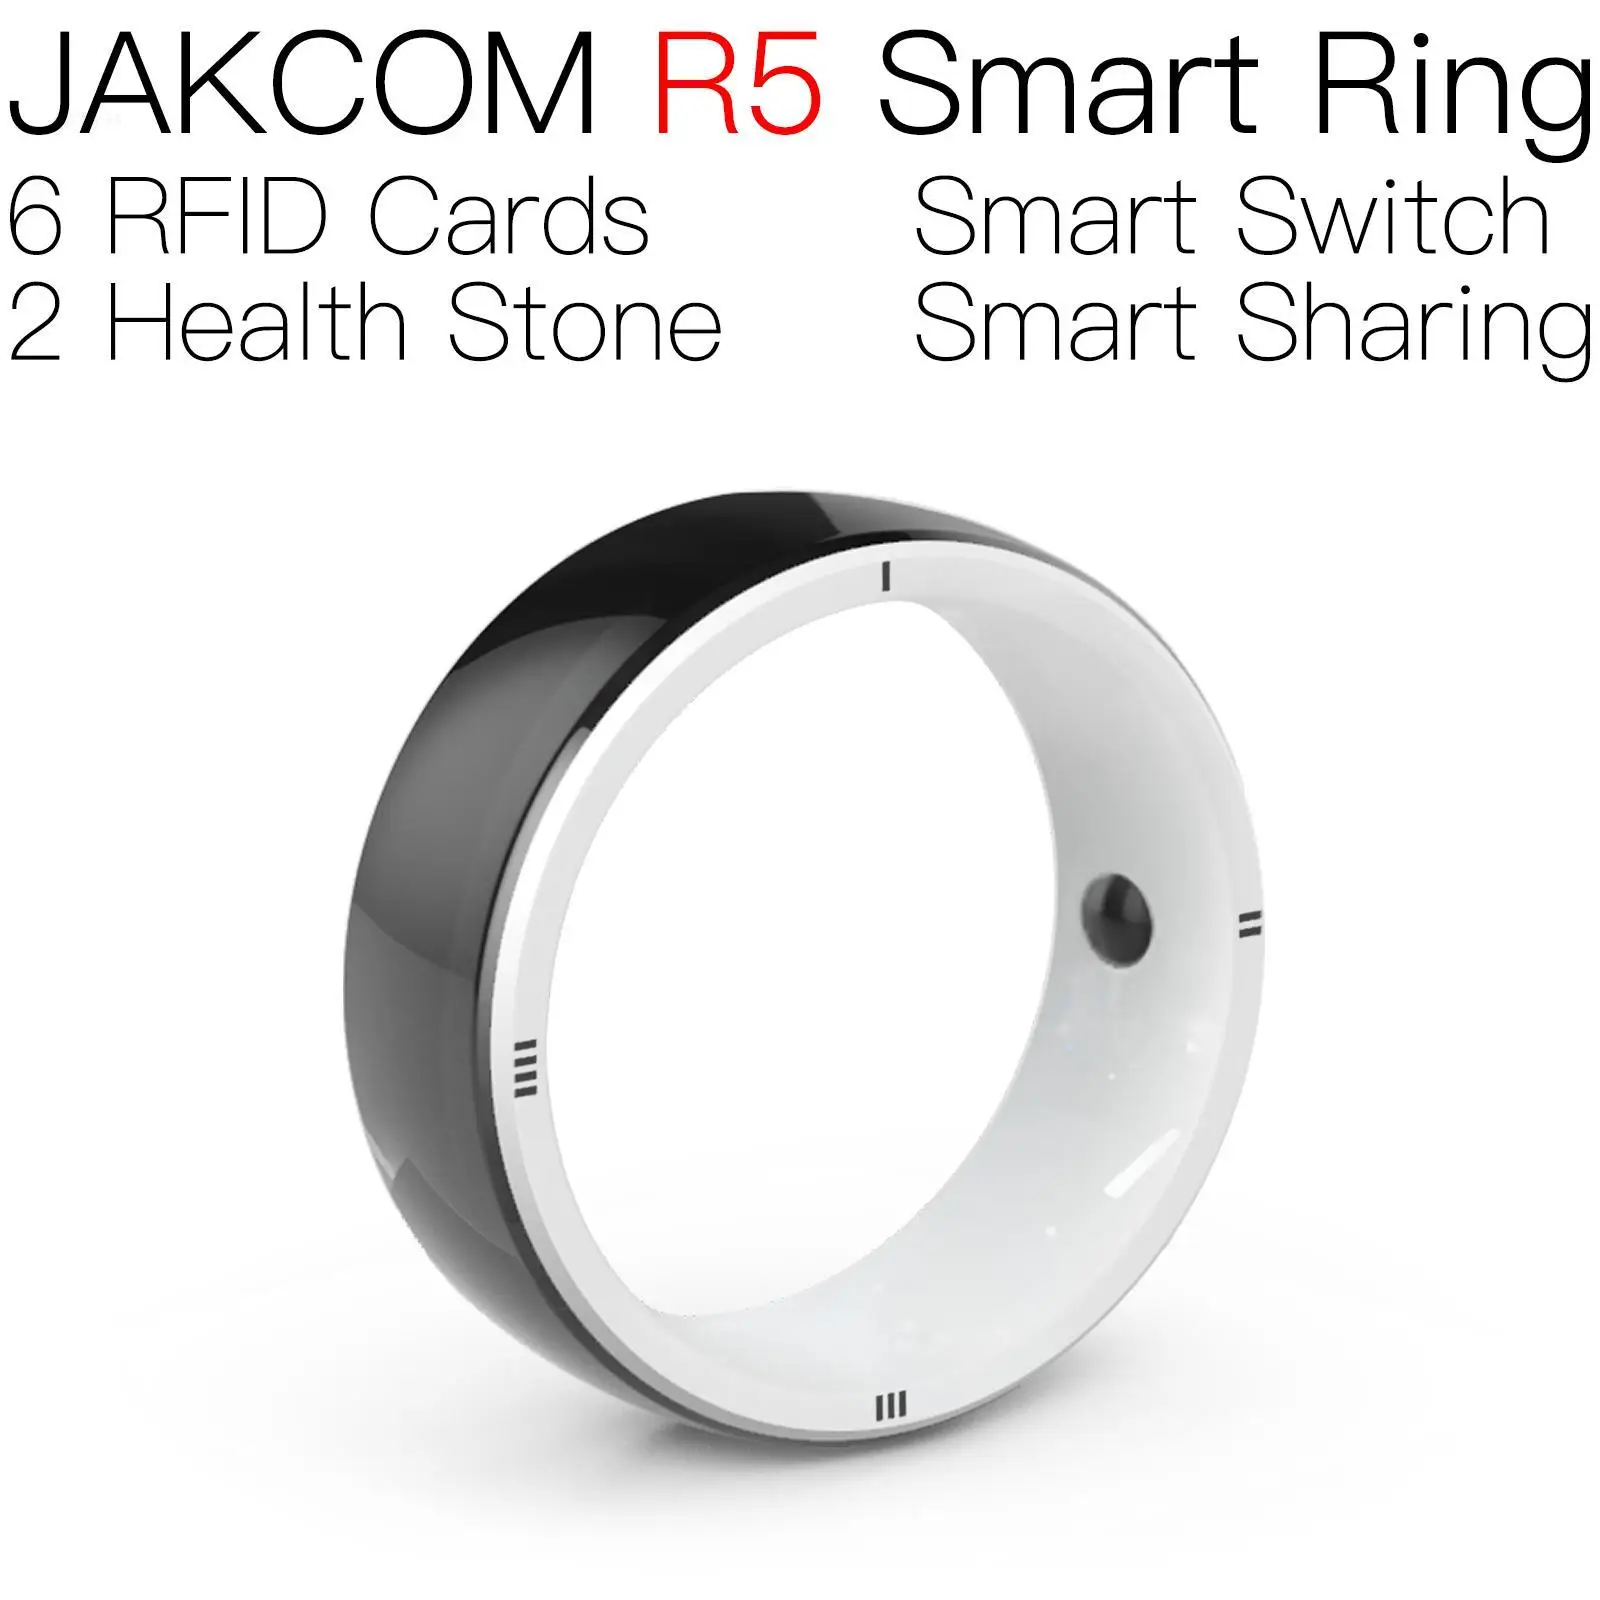 

JAKCOM R5 Smart Ring better than tools card rfid anti metal 125 khz coil park web based uhf reader rs522 camelon nfc microchip